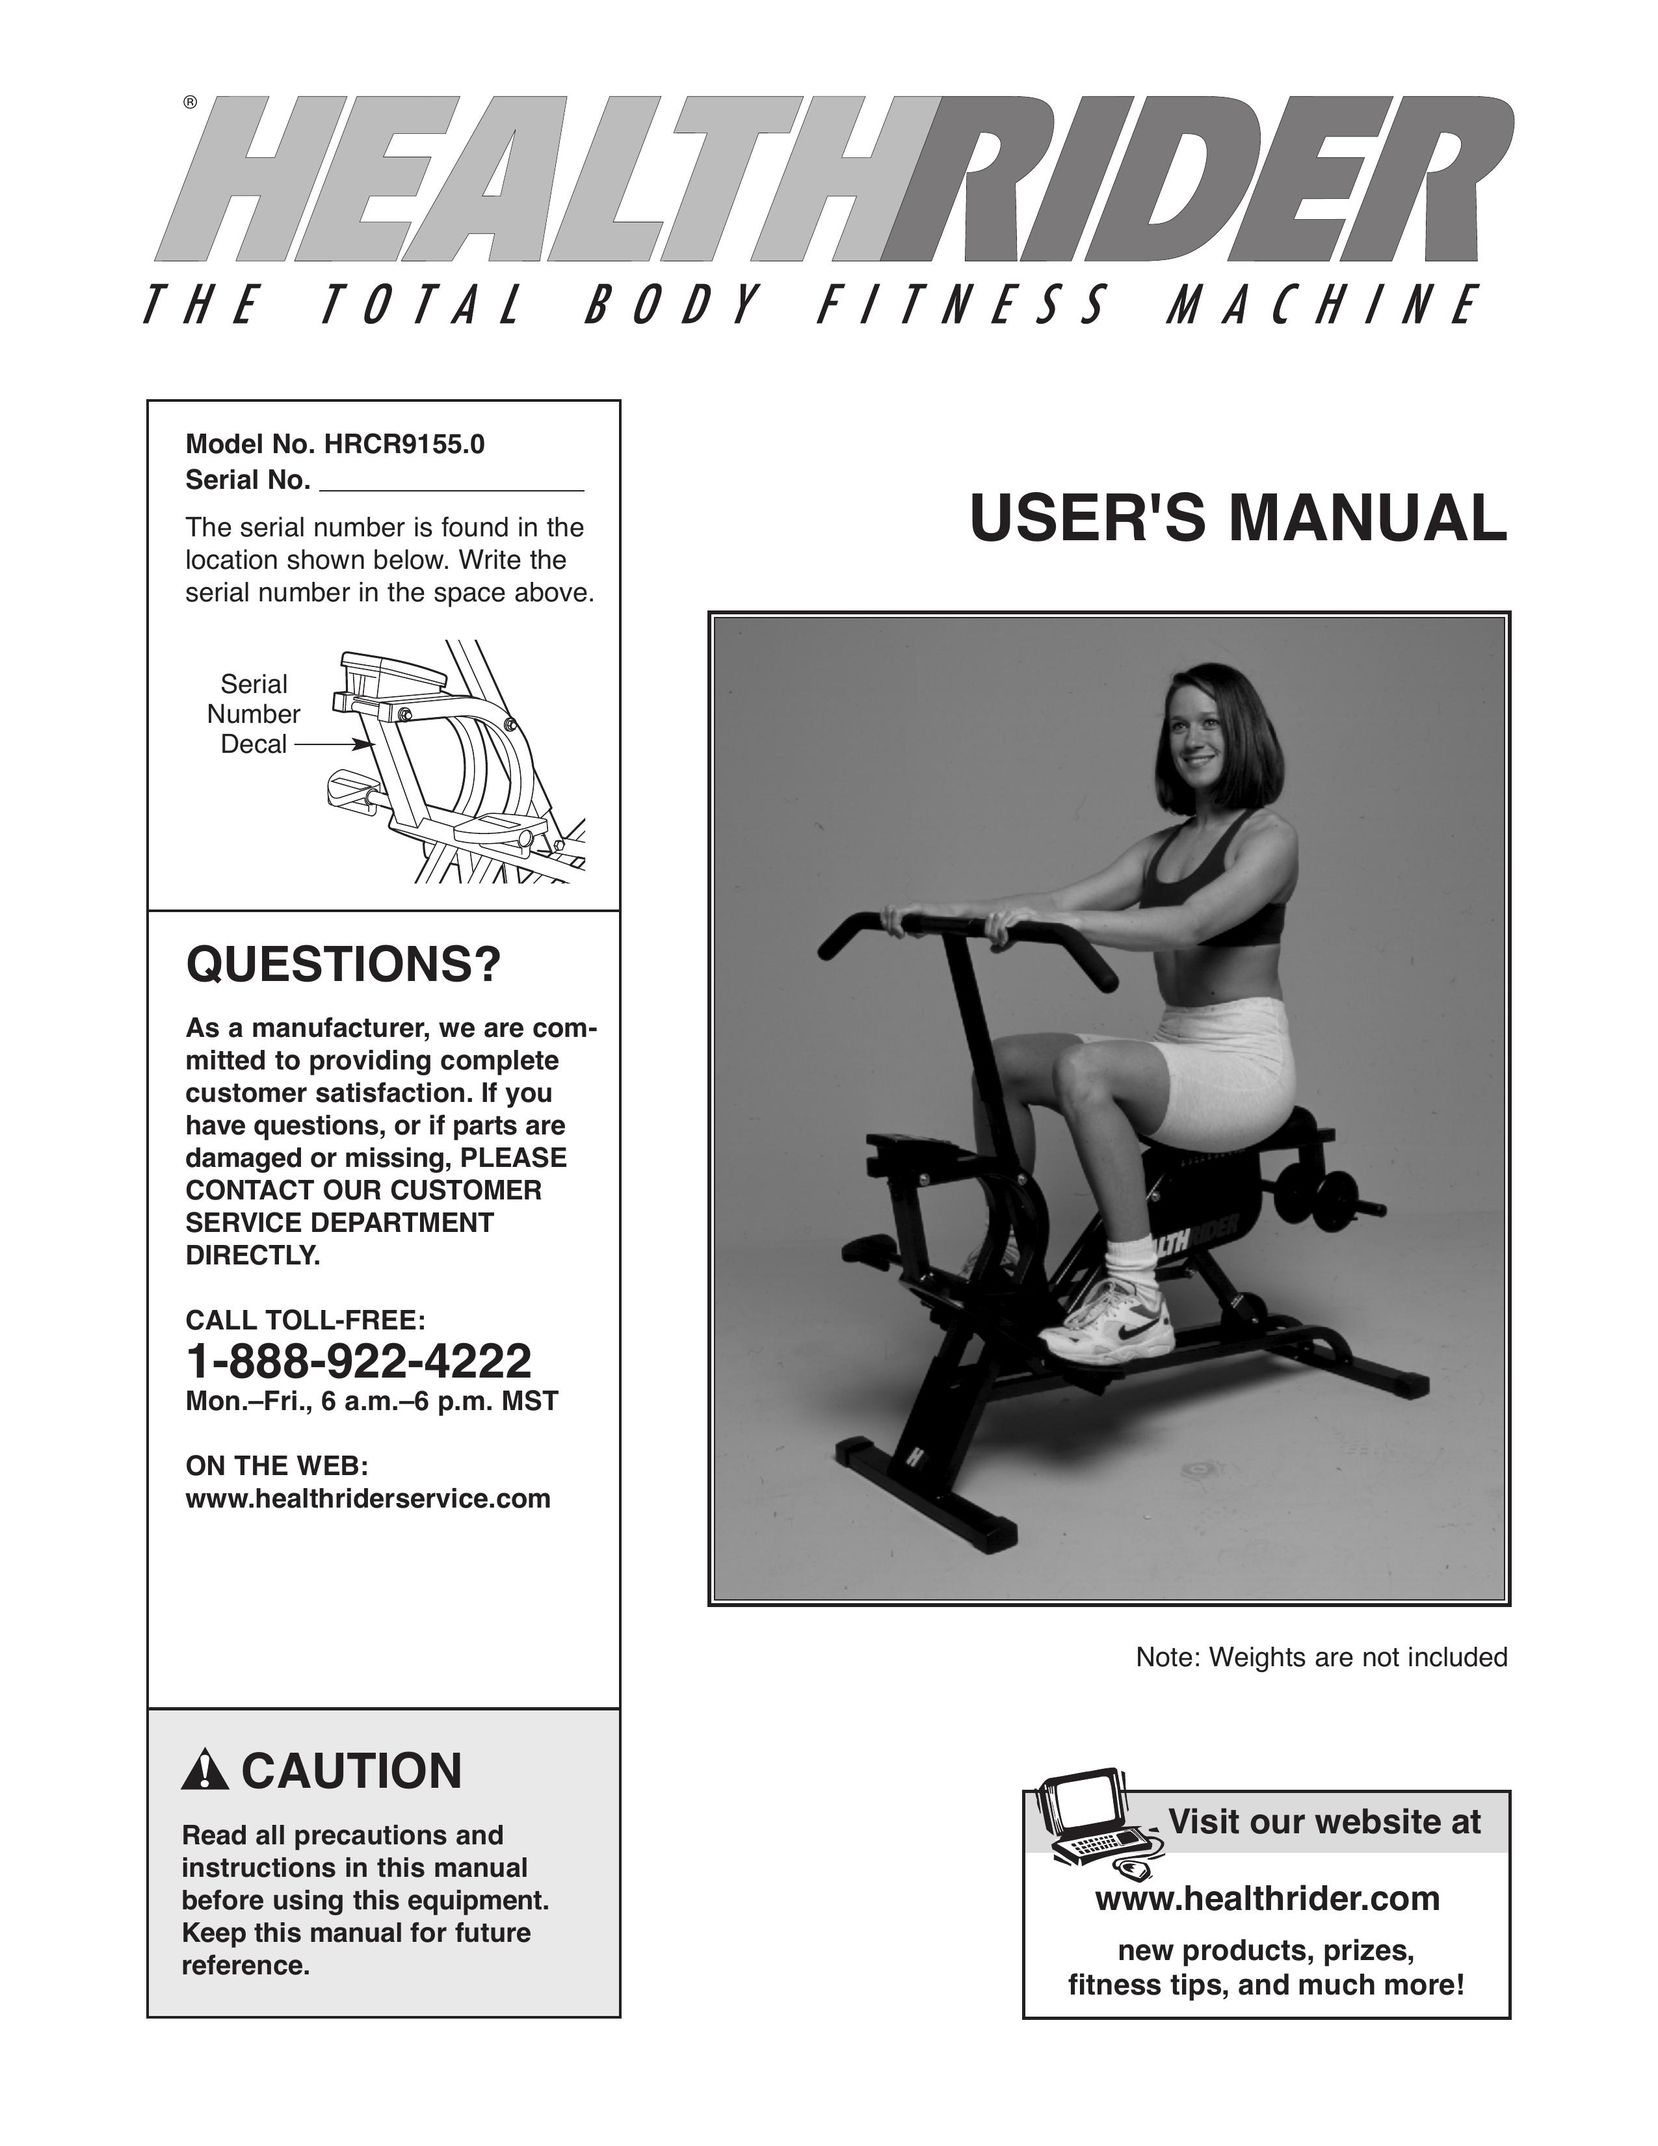 Healthrider HRCR9155.0 Home Gym User Manual